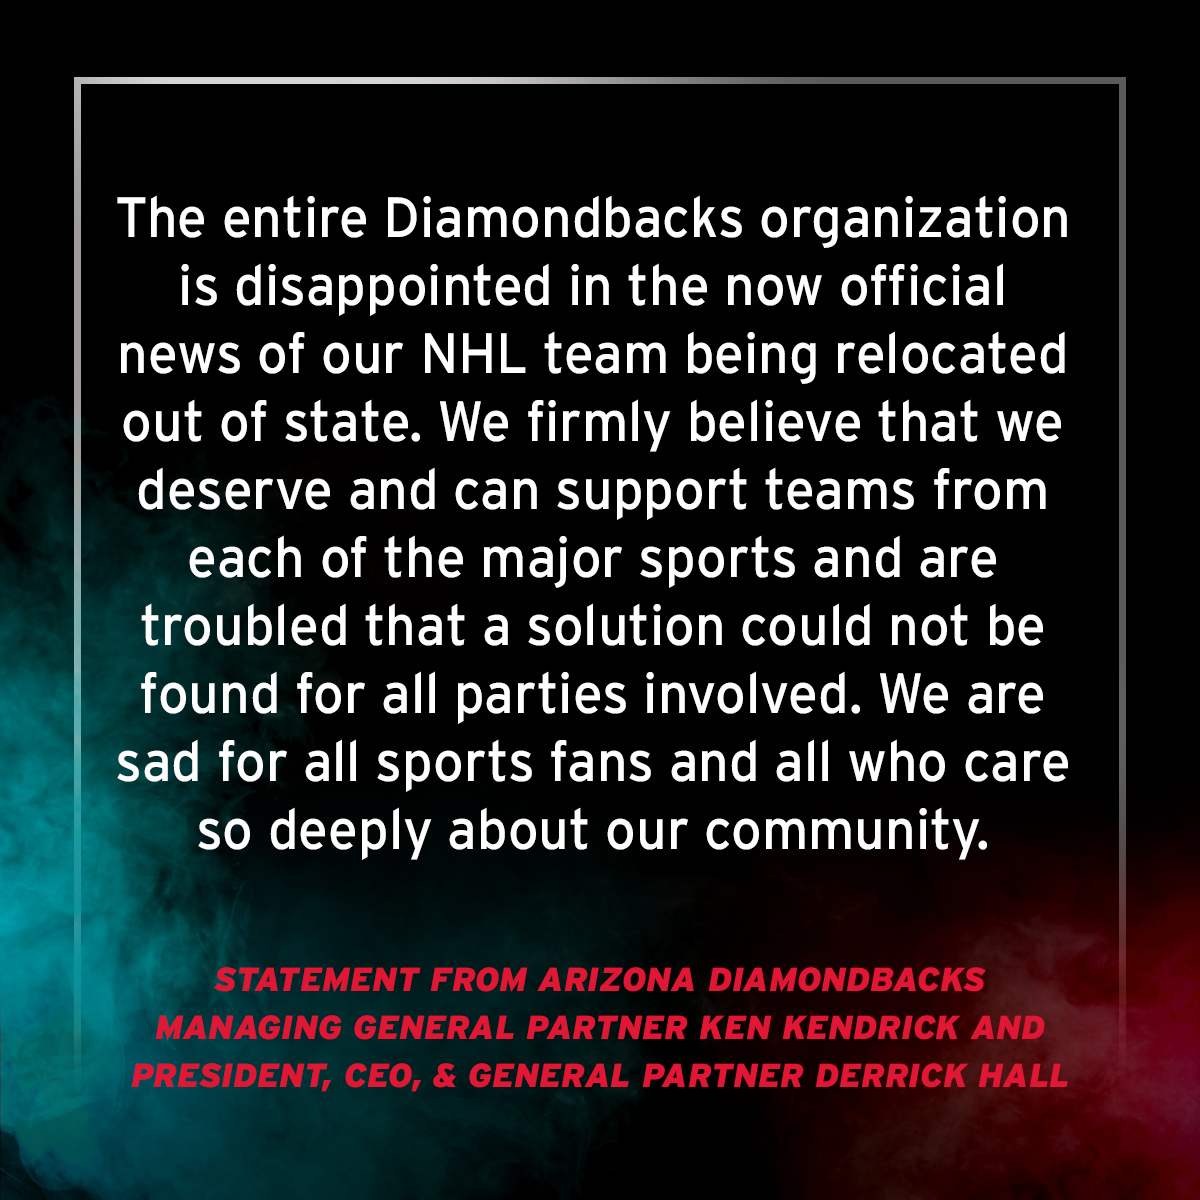 A statement from the Arizona Diamondbacks.